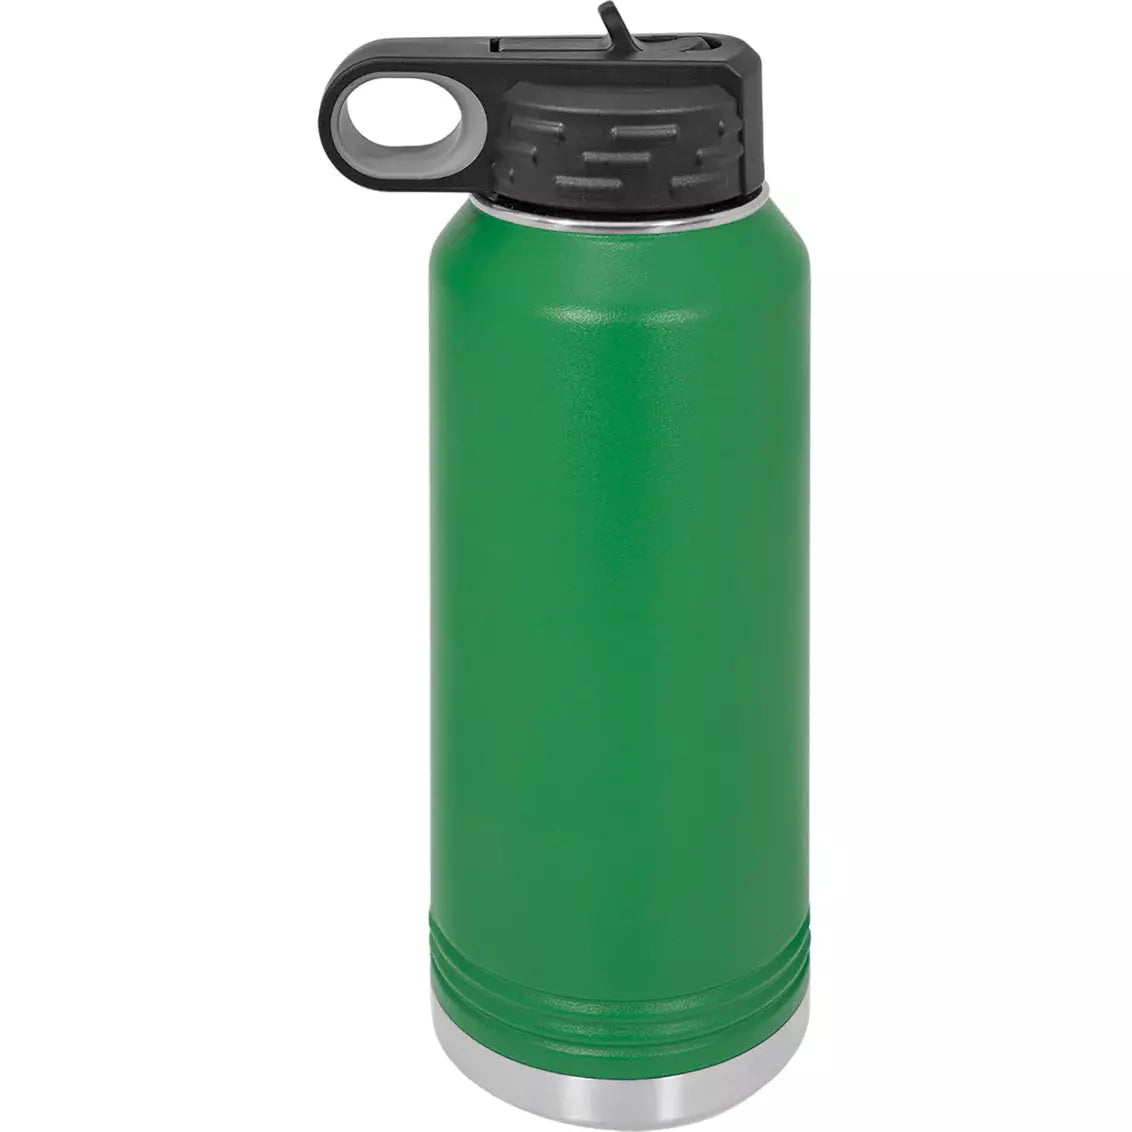 40 oz Stainless Steel Sports Water Bottle Polar Camel Blank